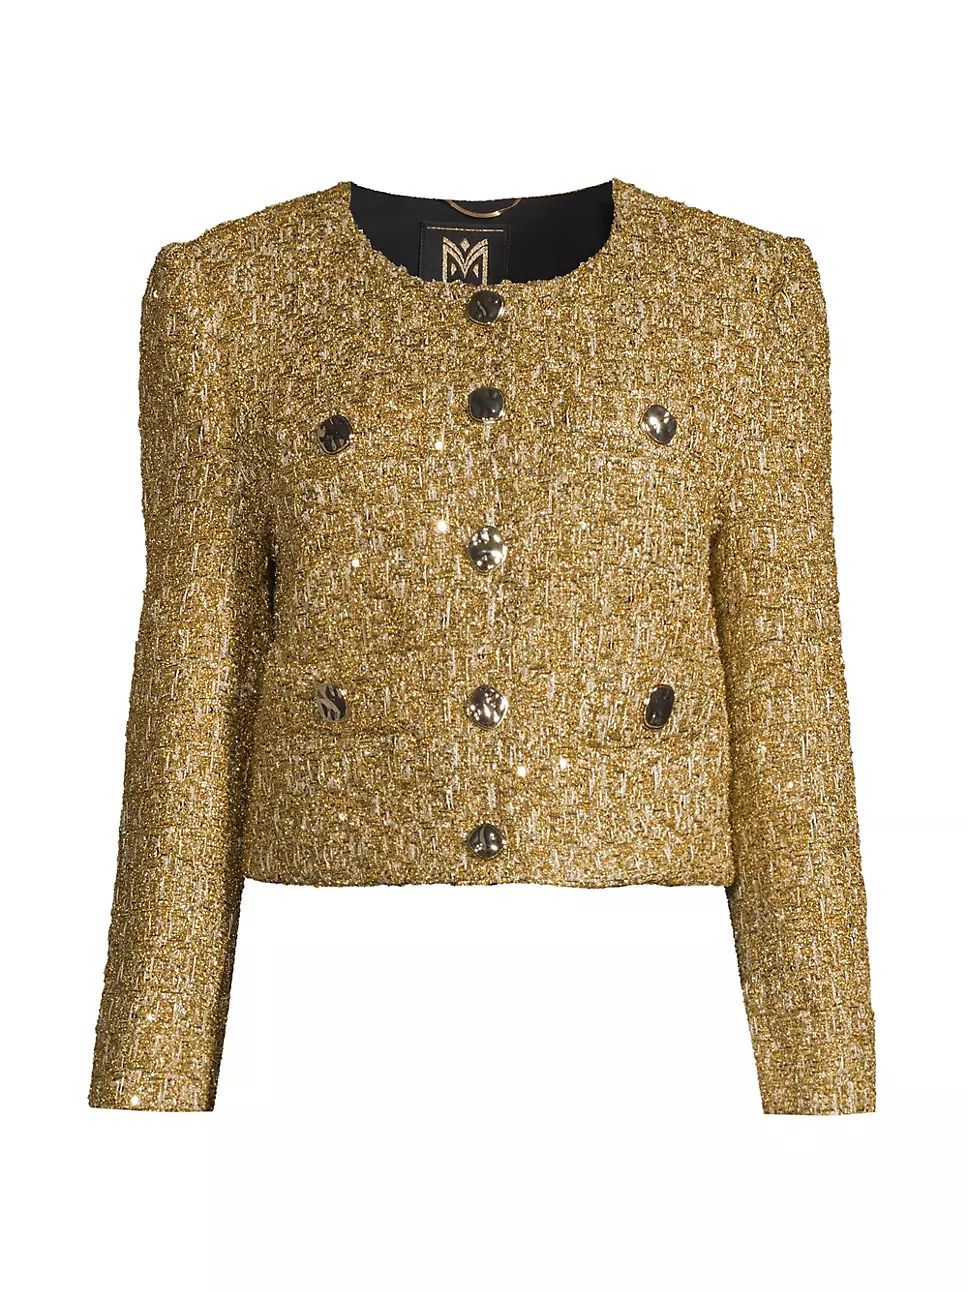 Milly Pheobe Metallic Tweed Jacket | Saks Fifth Avenue